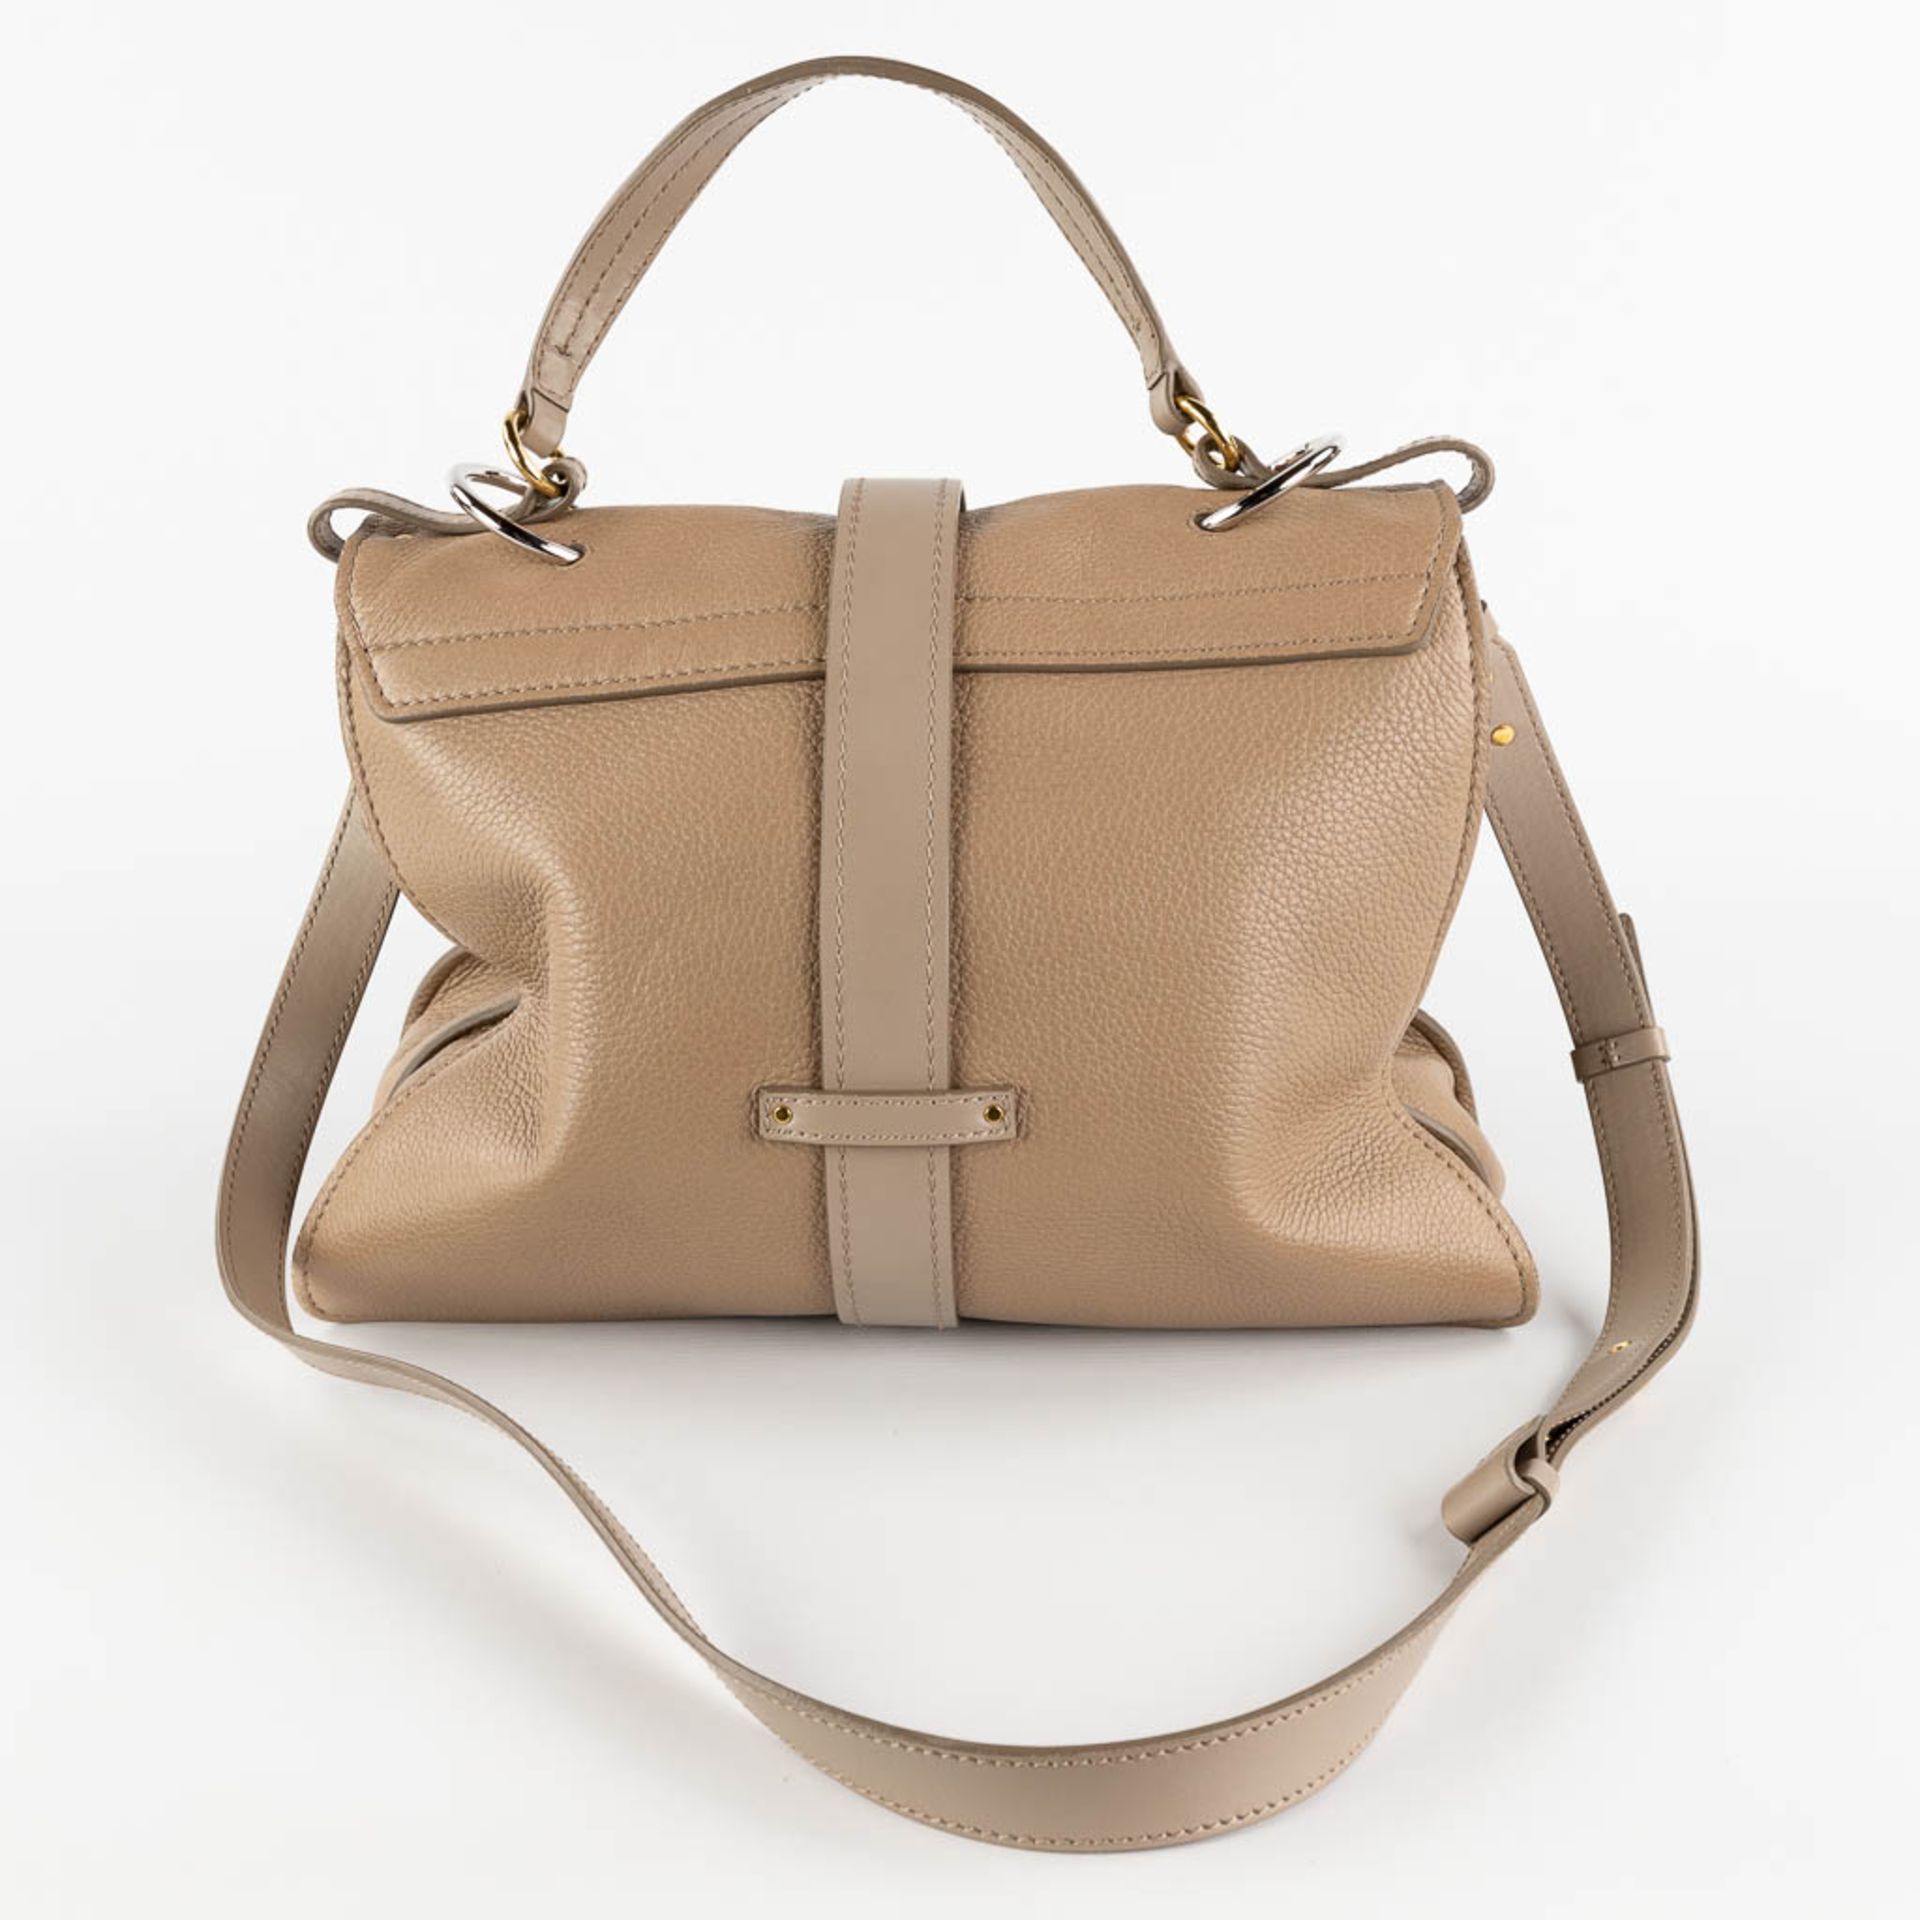 Chloé, a handbag made of brown leather. (W:38 x H:32 cm) - Image 5 of 19